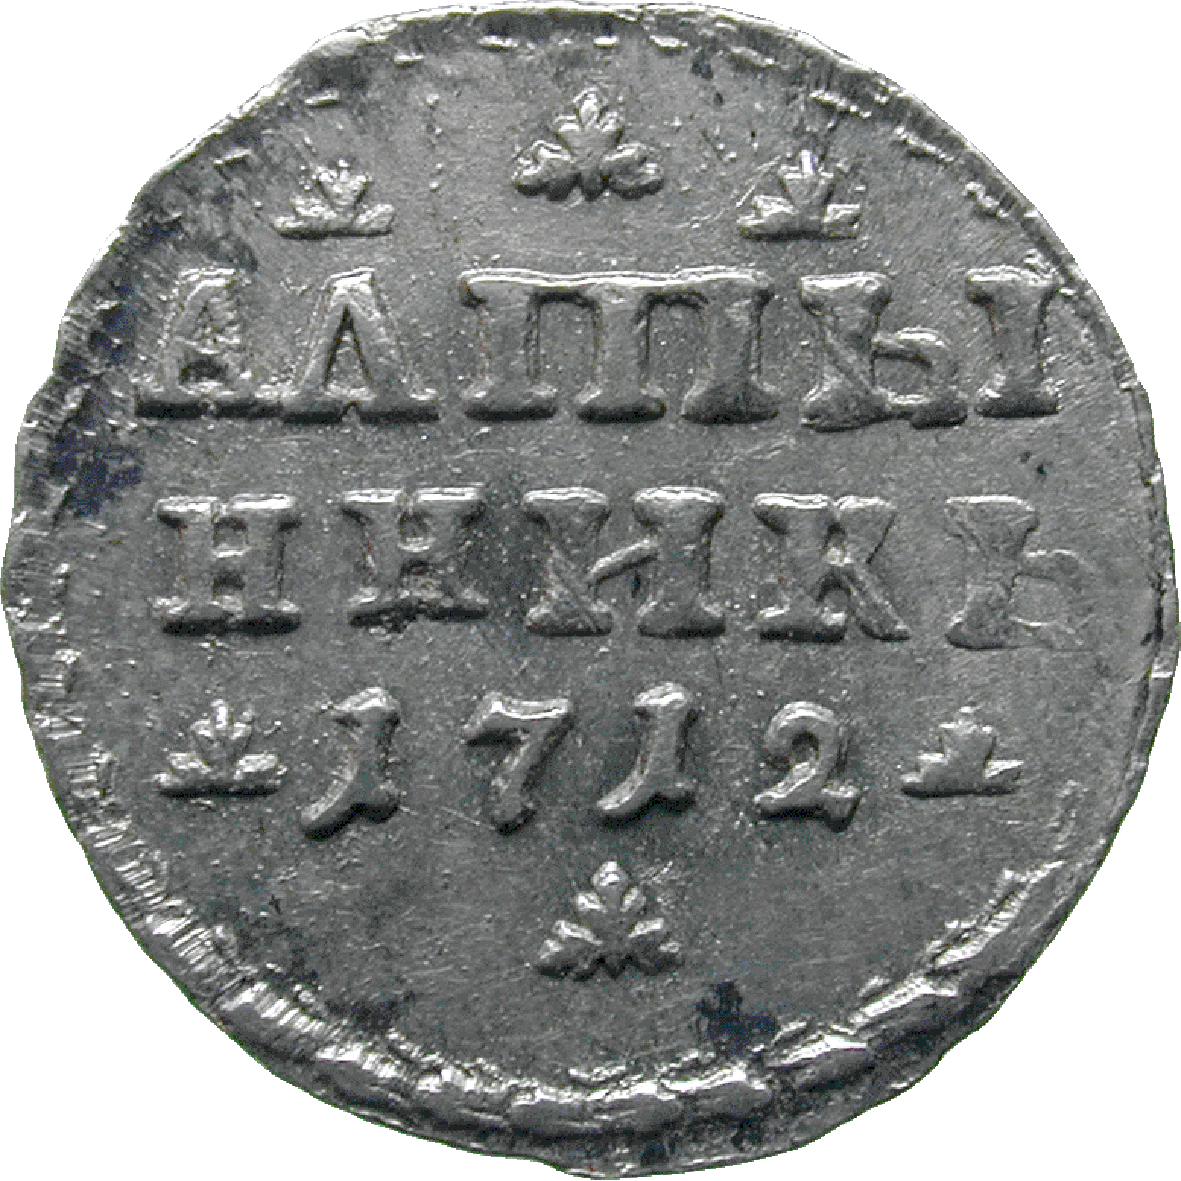 Zarenreich Russland, Peter I. der Grosse, Altyn 1712 (reverse)